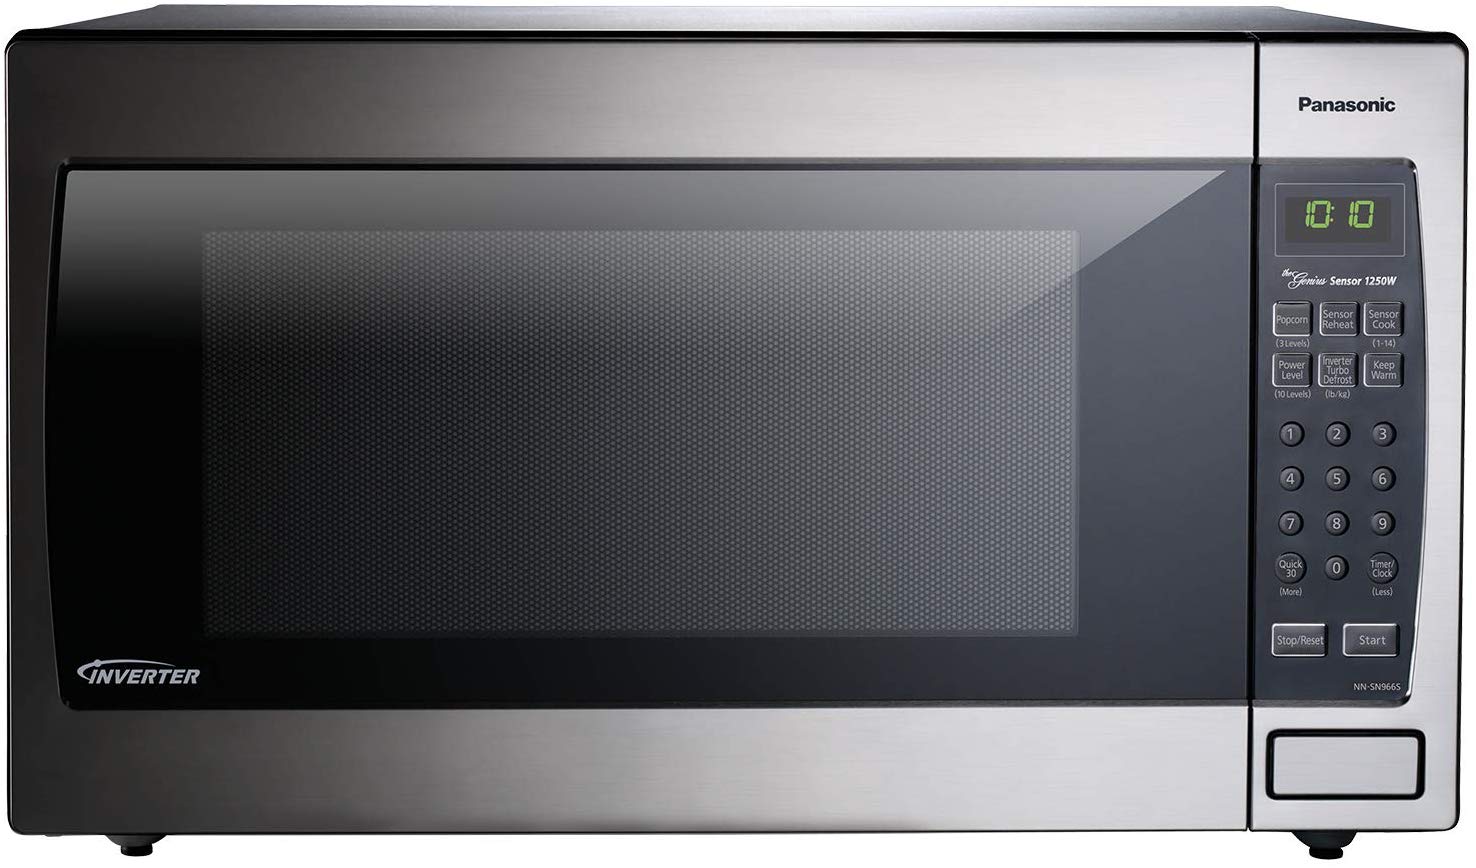 Panasonic SN966S Countertop Microwave